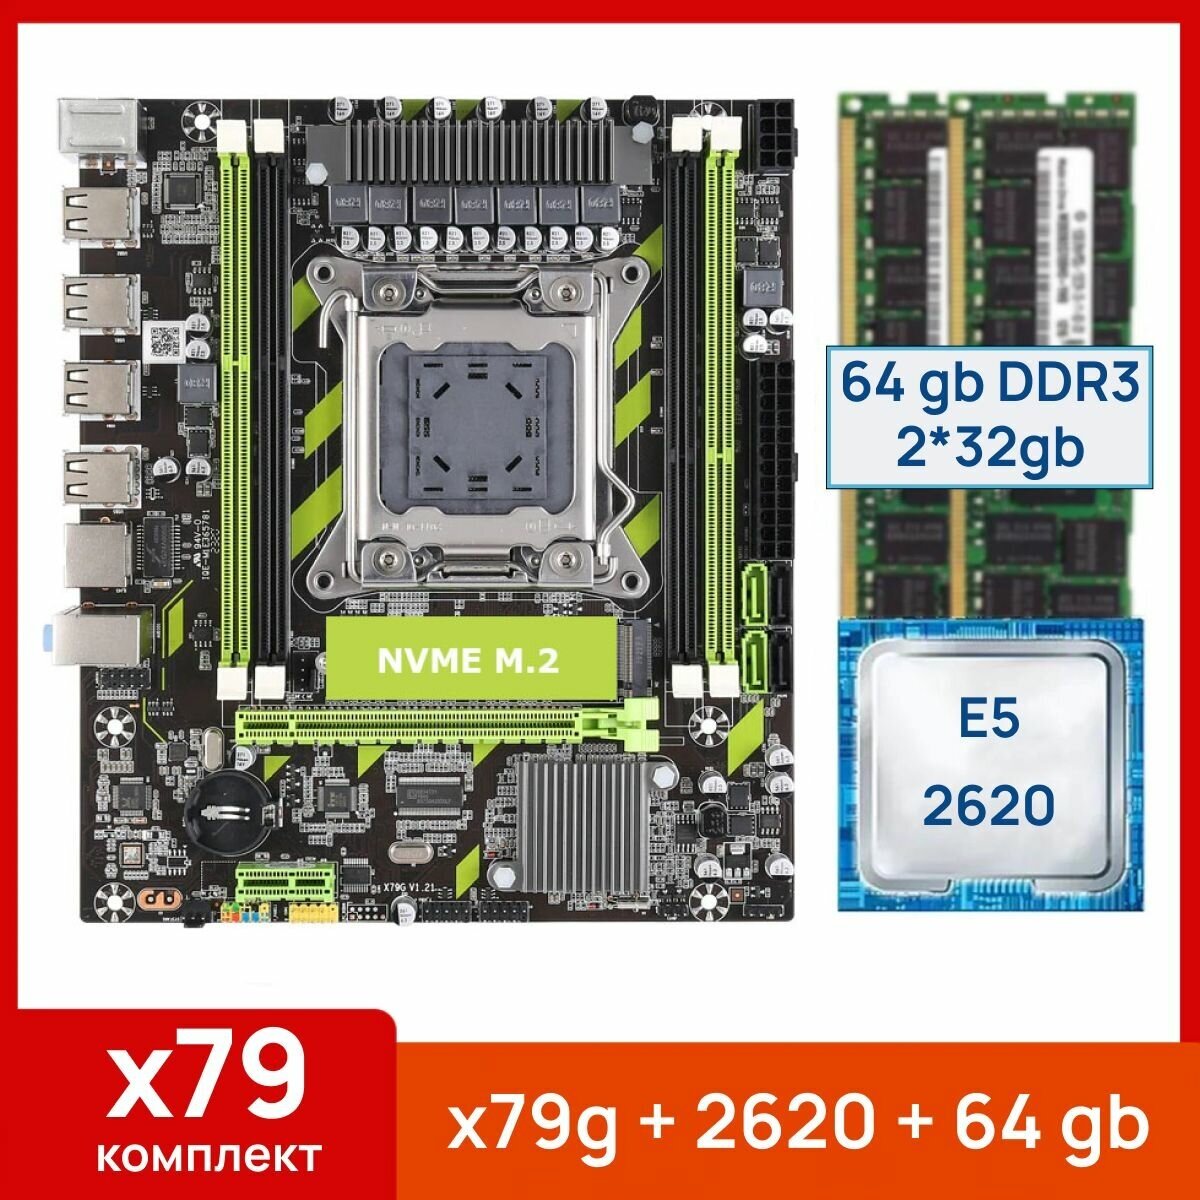 Комплект: Atermiter x79g + Xeon E5 2620 + 64 gb(2x32gb) DDR3 ecc reg